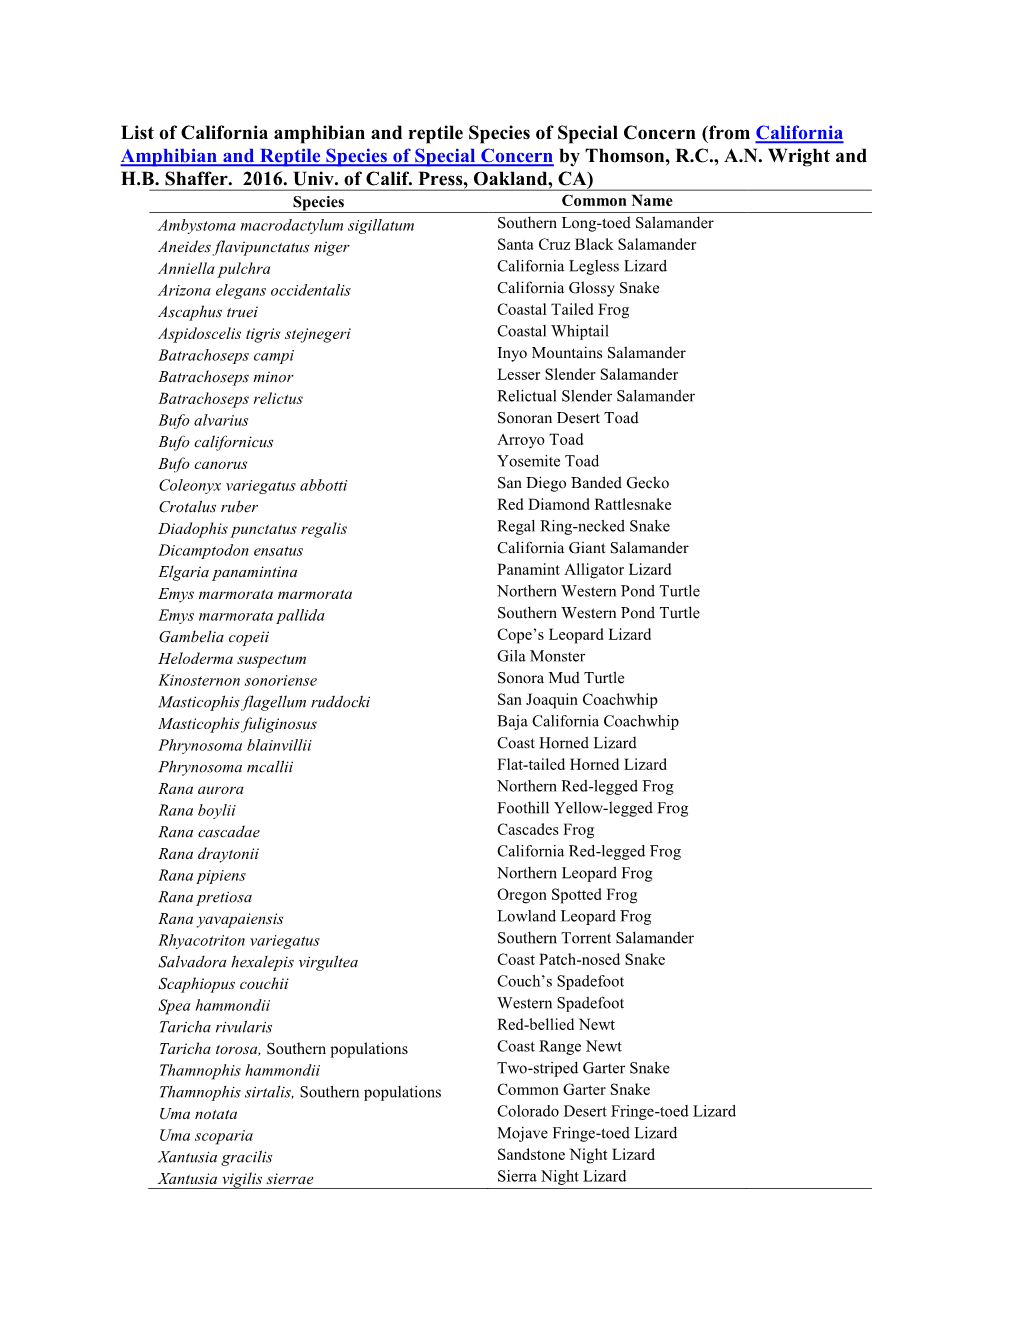 List of California Amphibian and Reptile Species of Special Concern (From California Amphibian and Reptile Species of Special Concern by Thomson, R.C., A.N